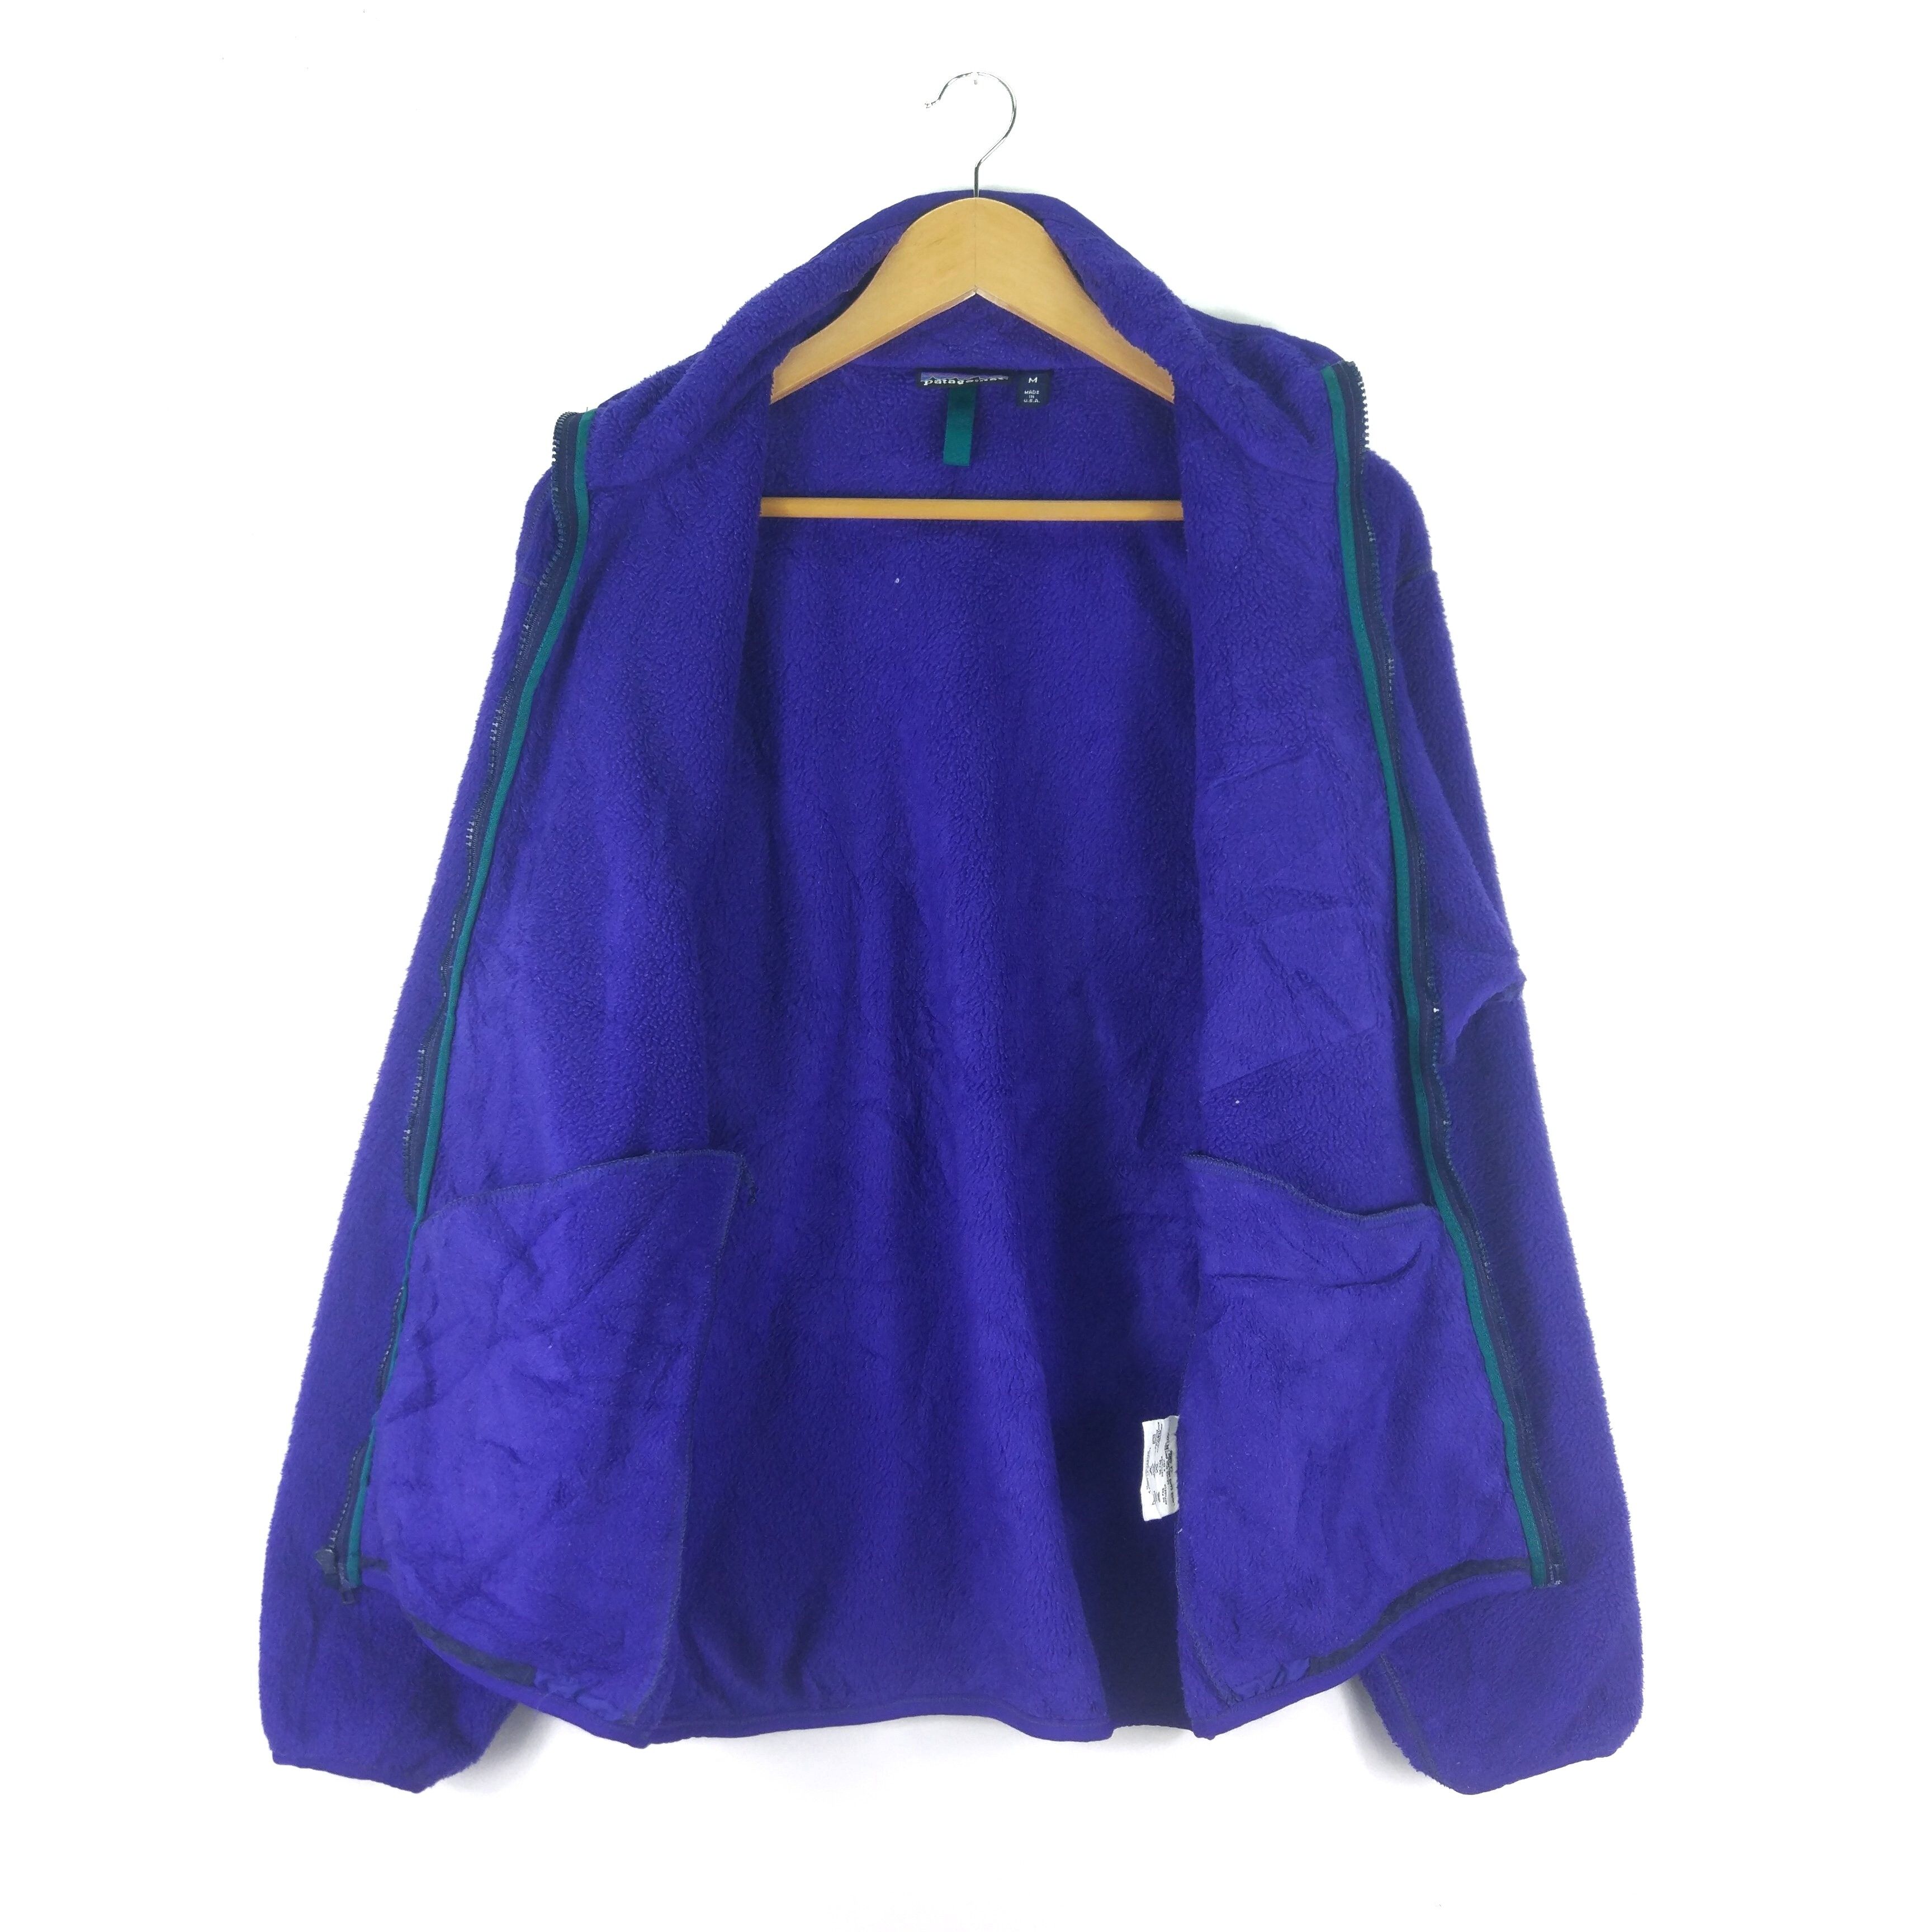 Patagonia Zip Up Fleece Jacket Made in USA - 2